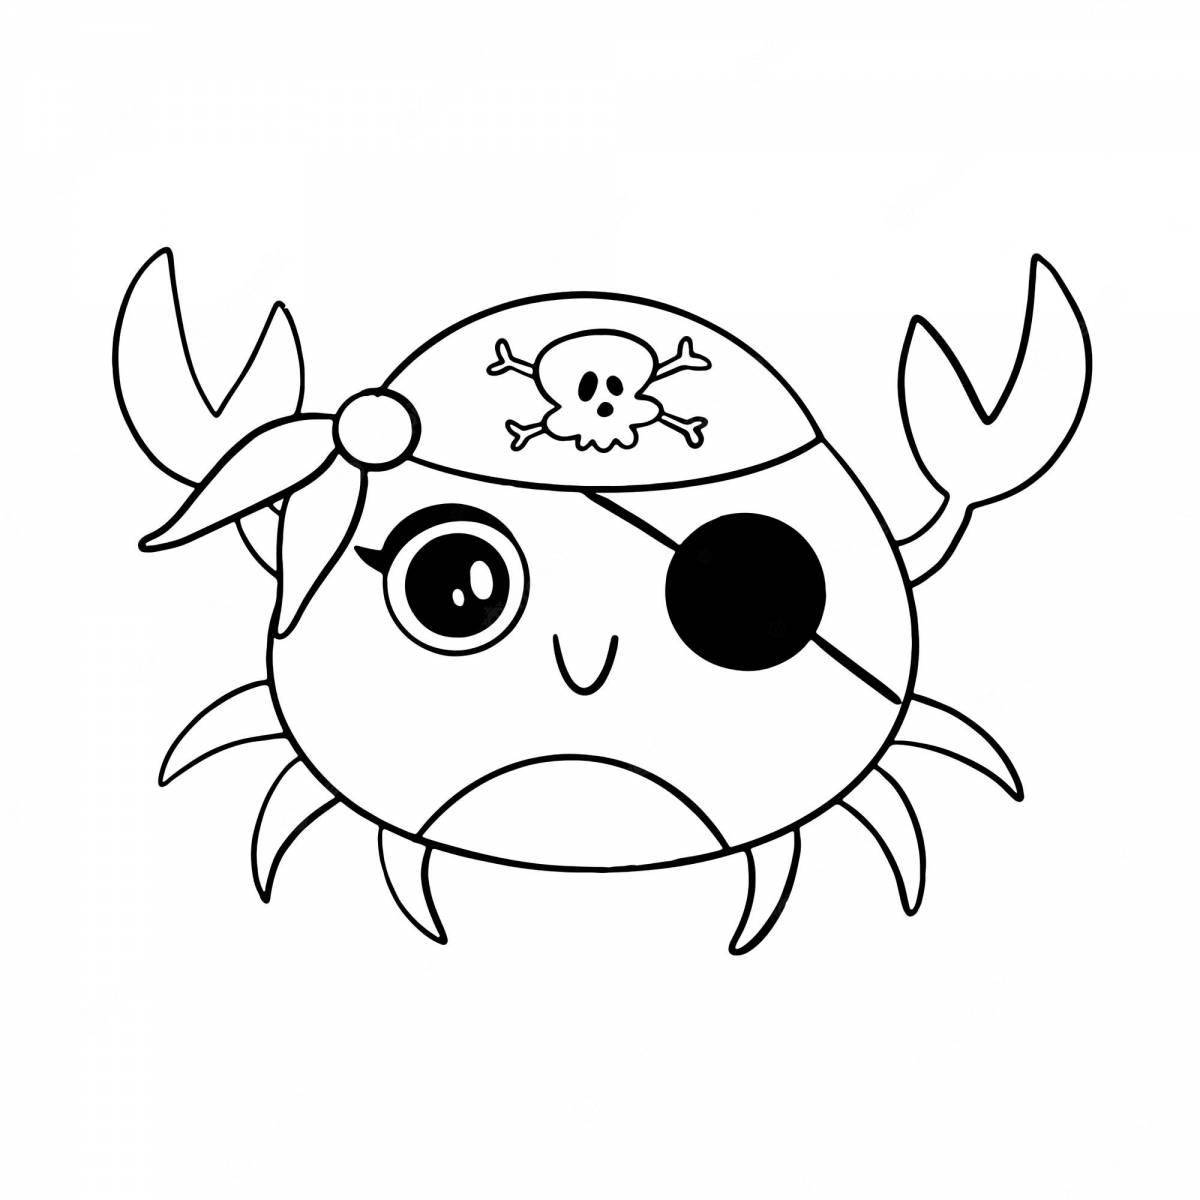 Captain crab incredible coloring book